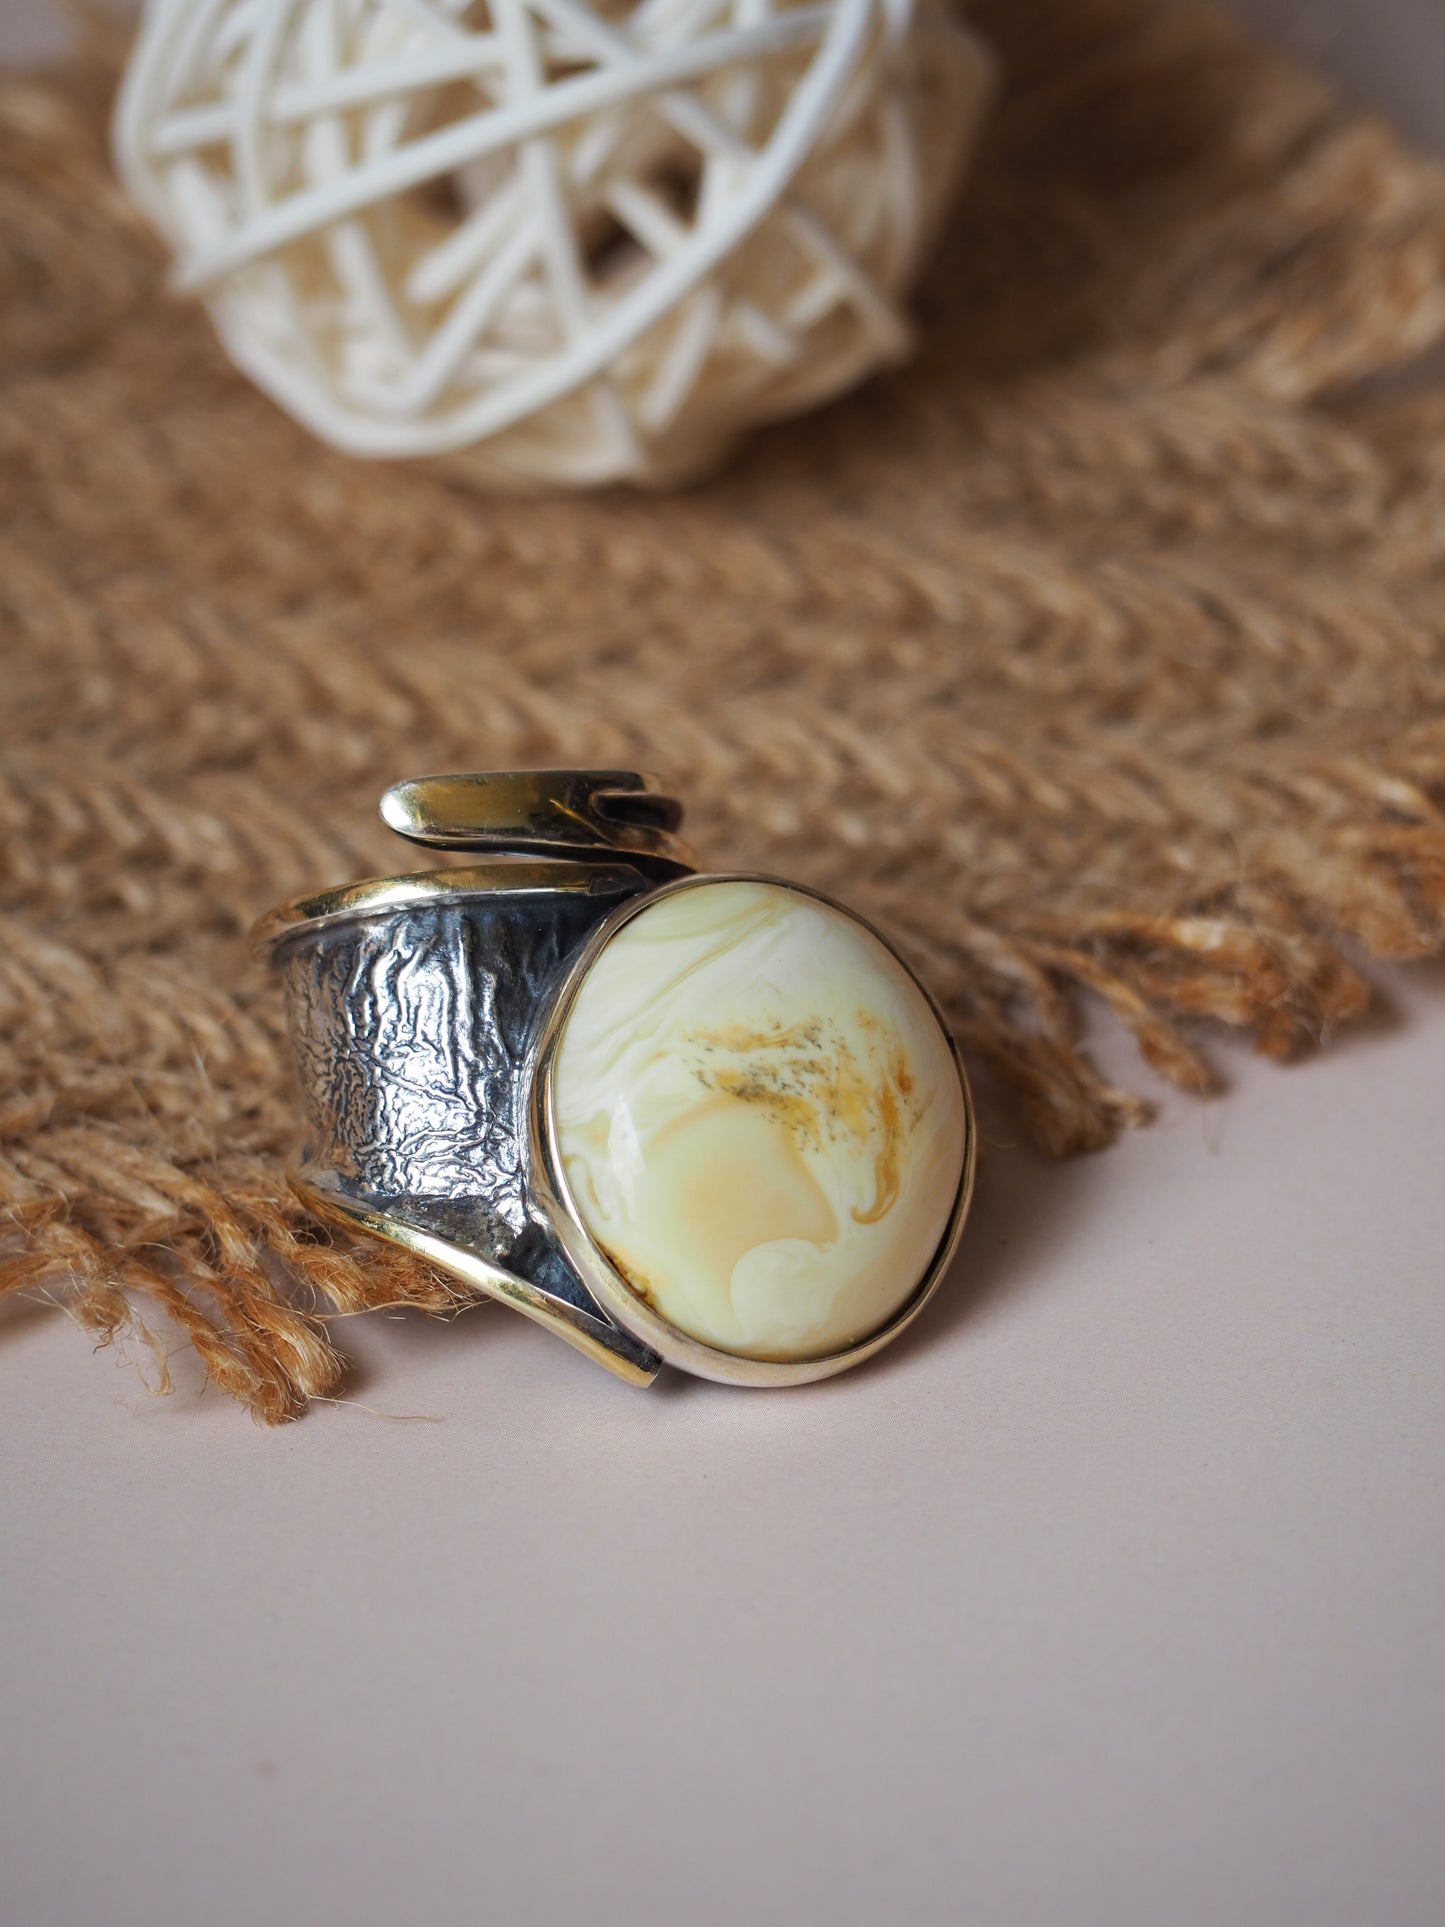 Unique White/ Milk Amber Big Silver/ Gold Pleated Ring